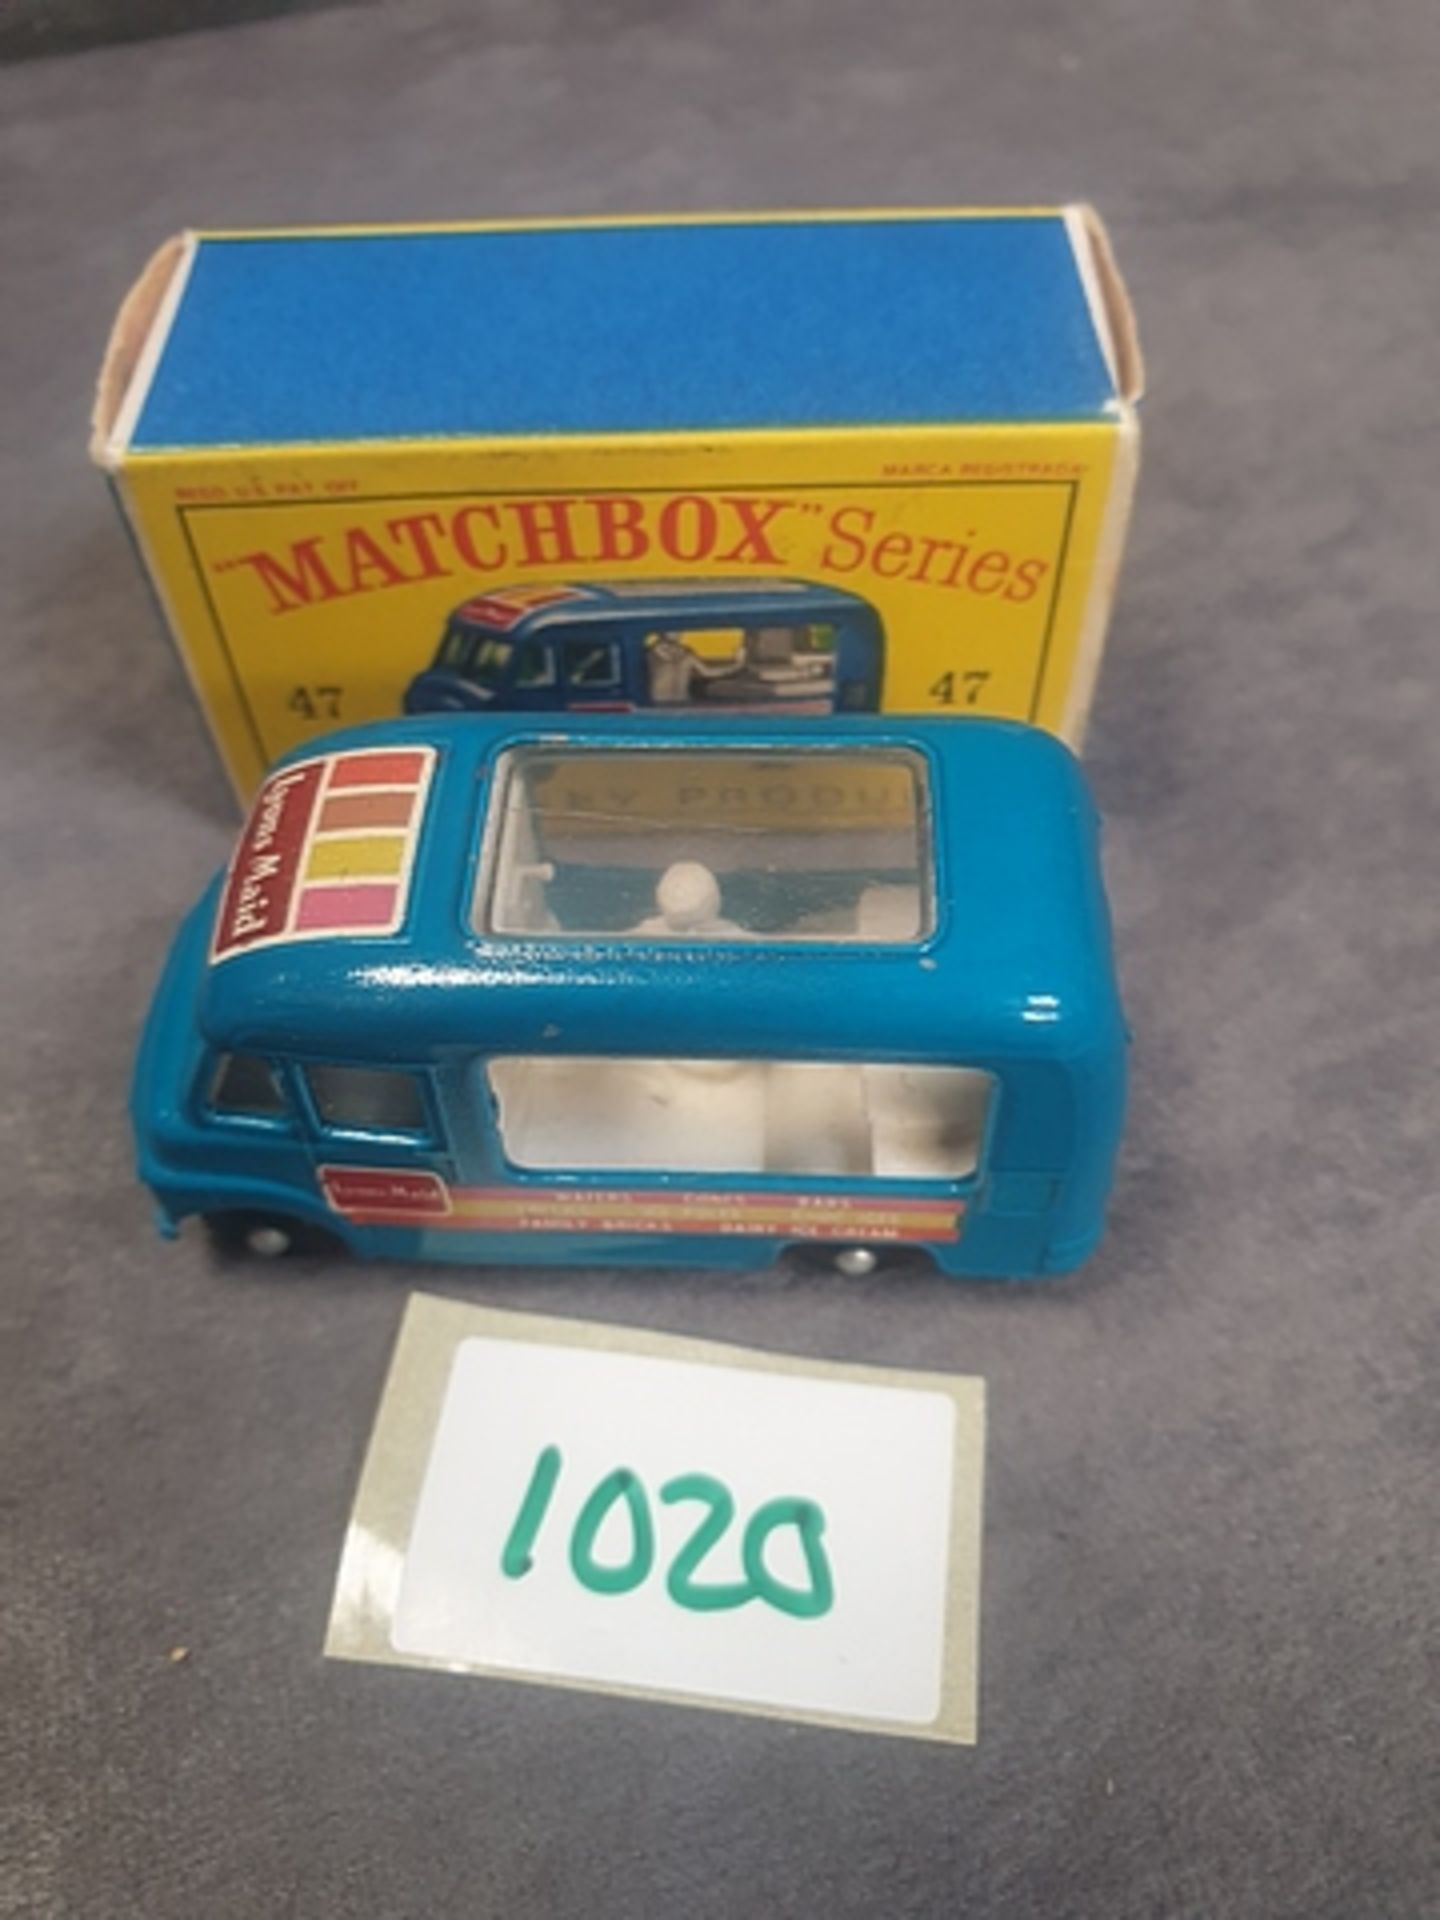 Matchbox Lesney # 47 metallic blue Lyons Maid Ice Cream Mobile Shop in a crisp Box - Image 2 of 2